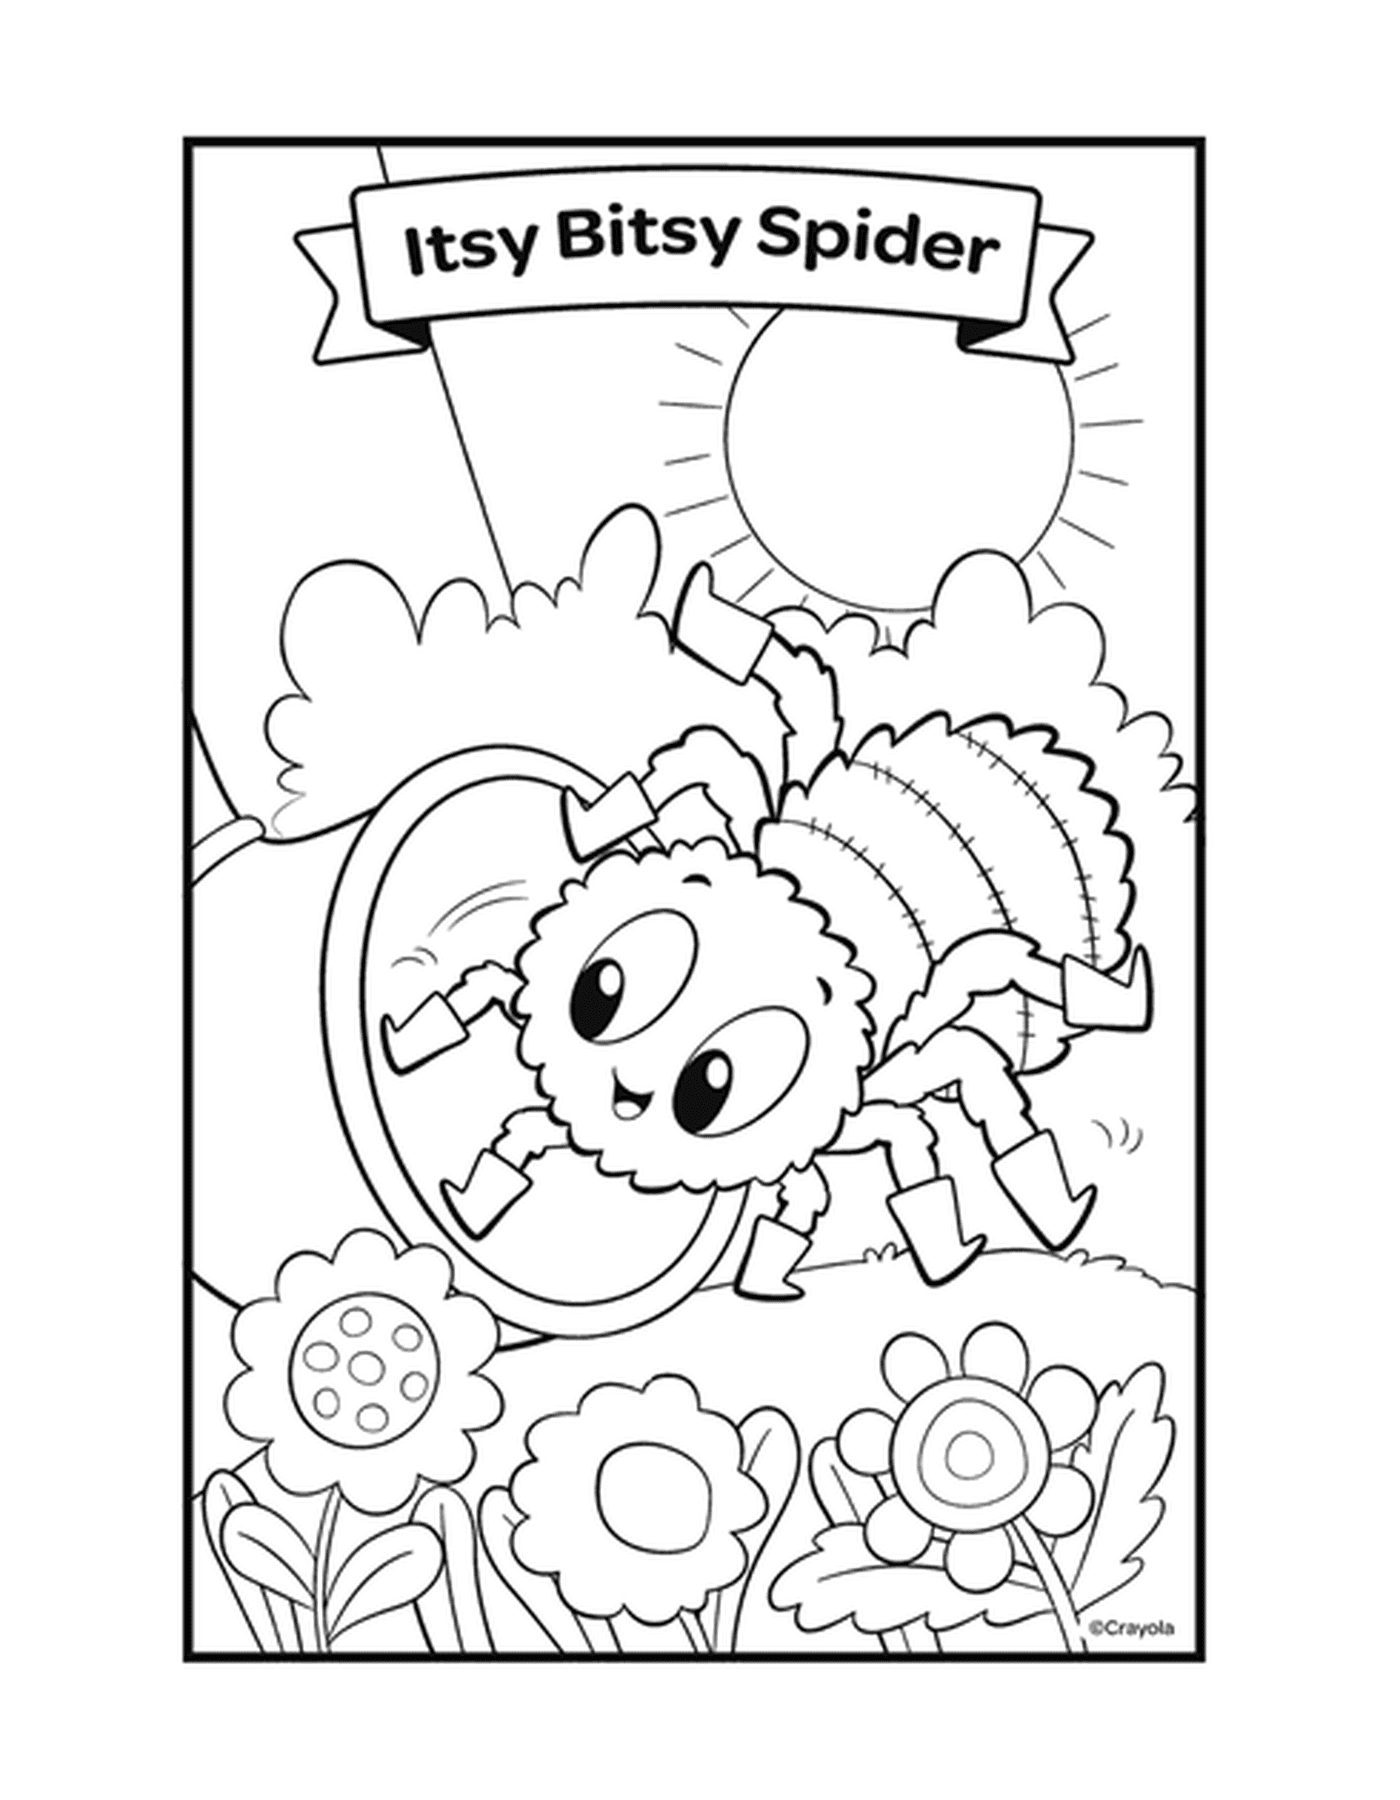  La filastrocca Itsy Bitsy Spider con un ragno su una ragnatela 